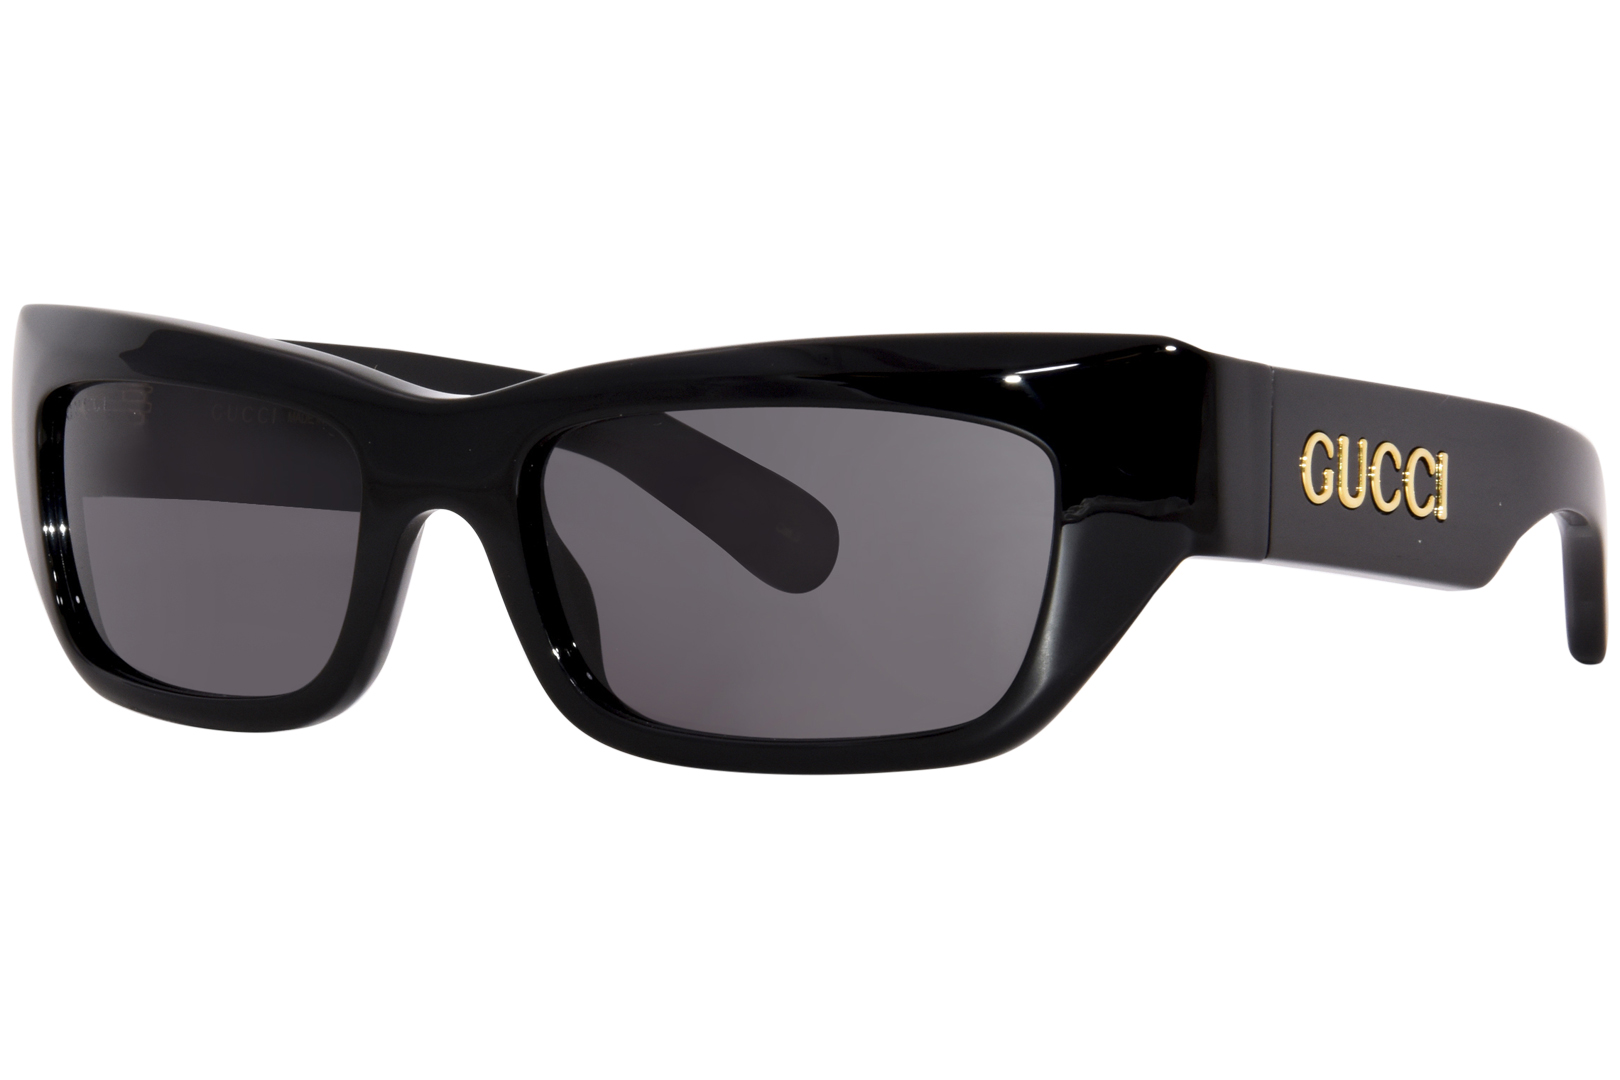 Gucci GG1296S Sunglasses Men's Rectangle Shape | EyeSpecs.com